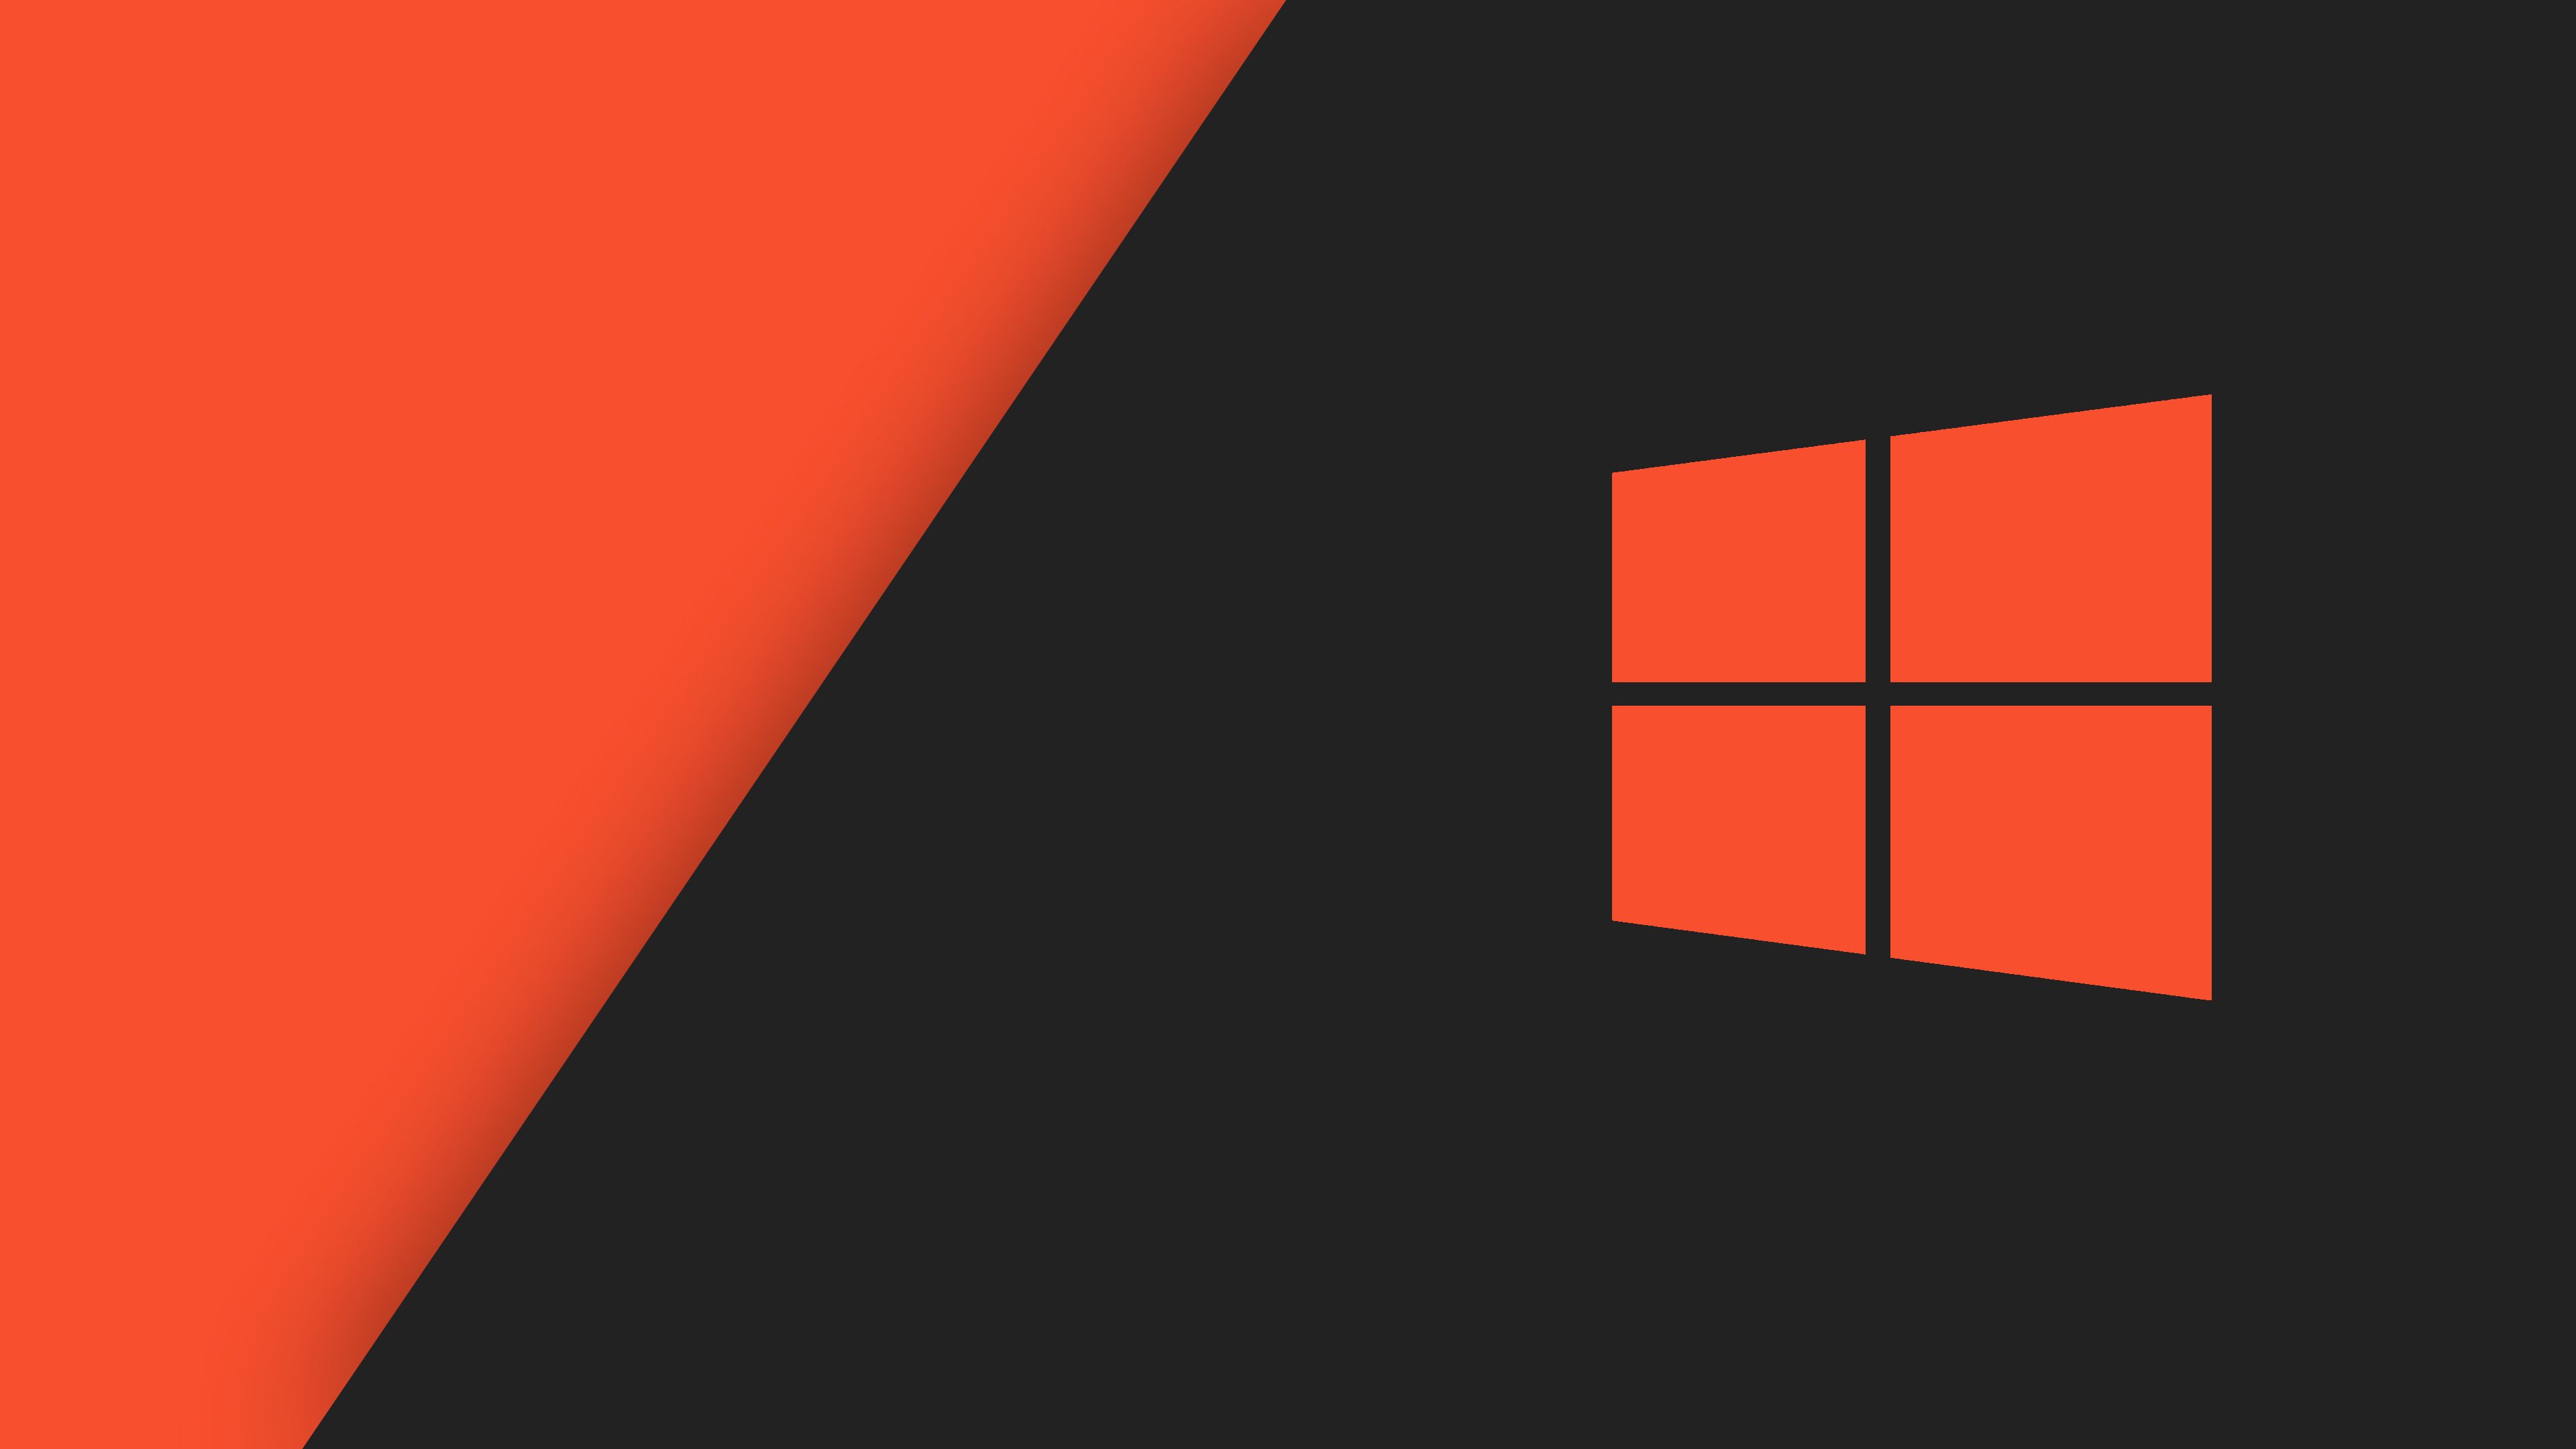 Windows 10 Wallpaper Red/Grey by Spectalfrag on DeviantArt